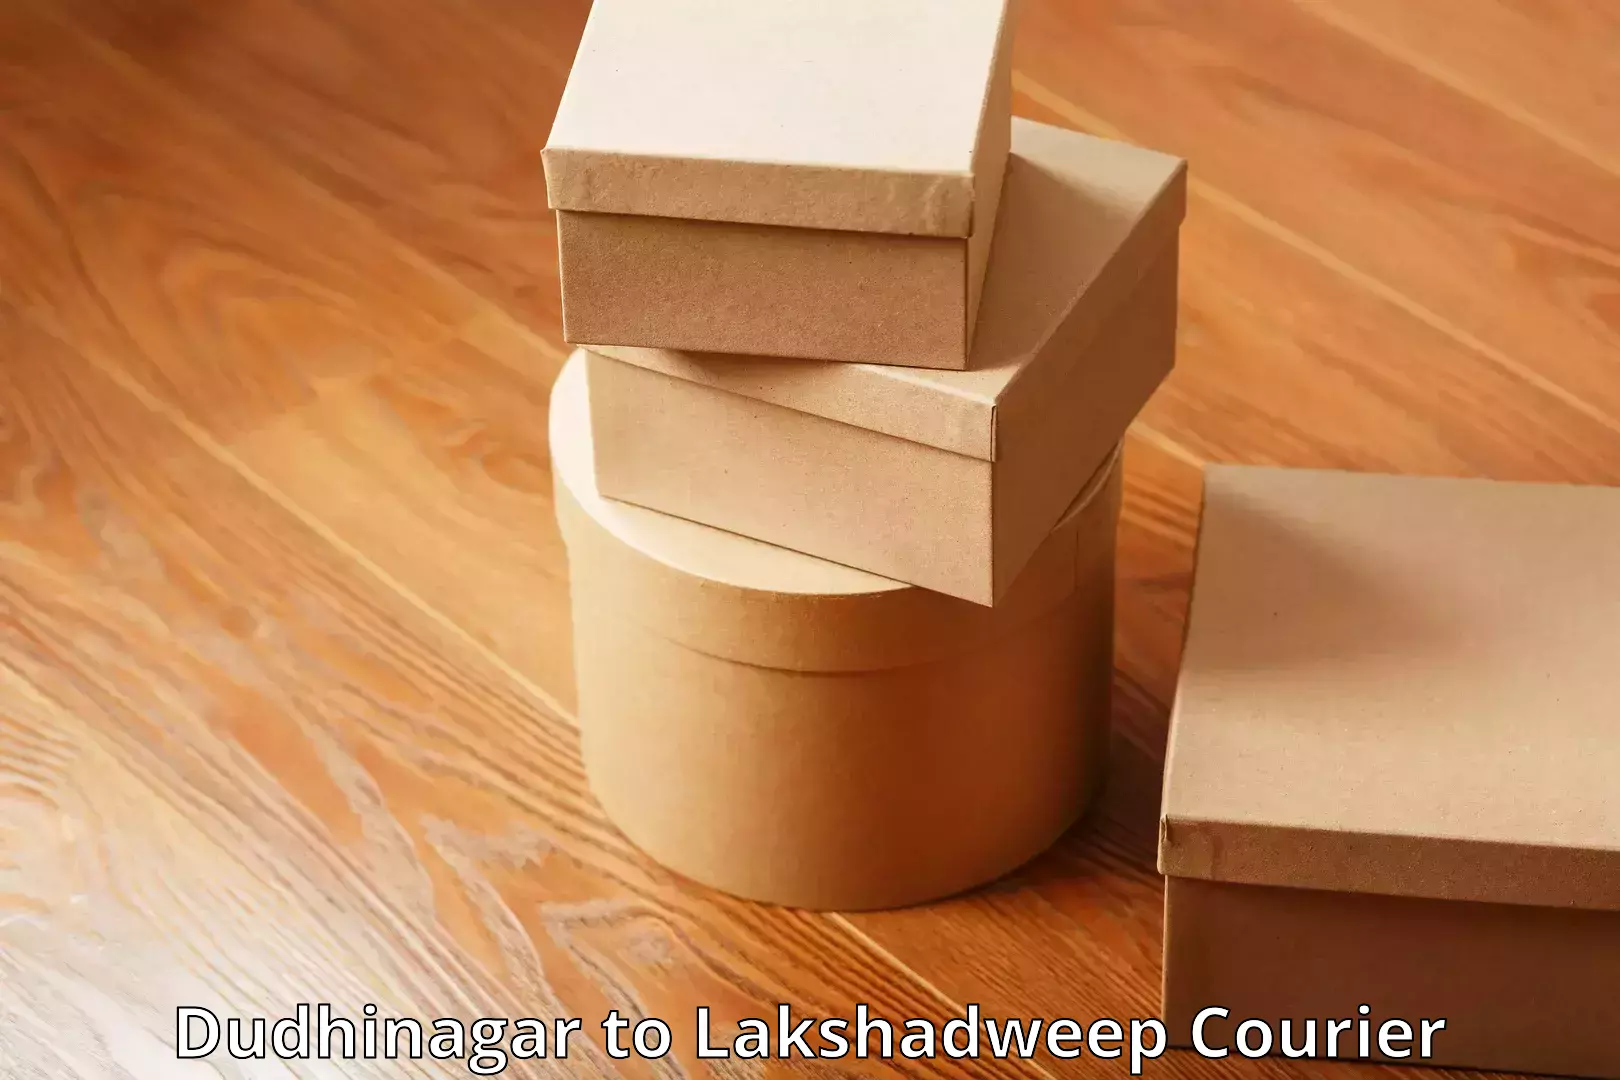 Luggage delivery app Dudhinagar to Lakshadweep